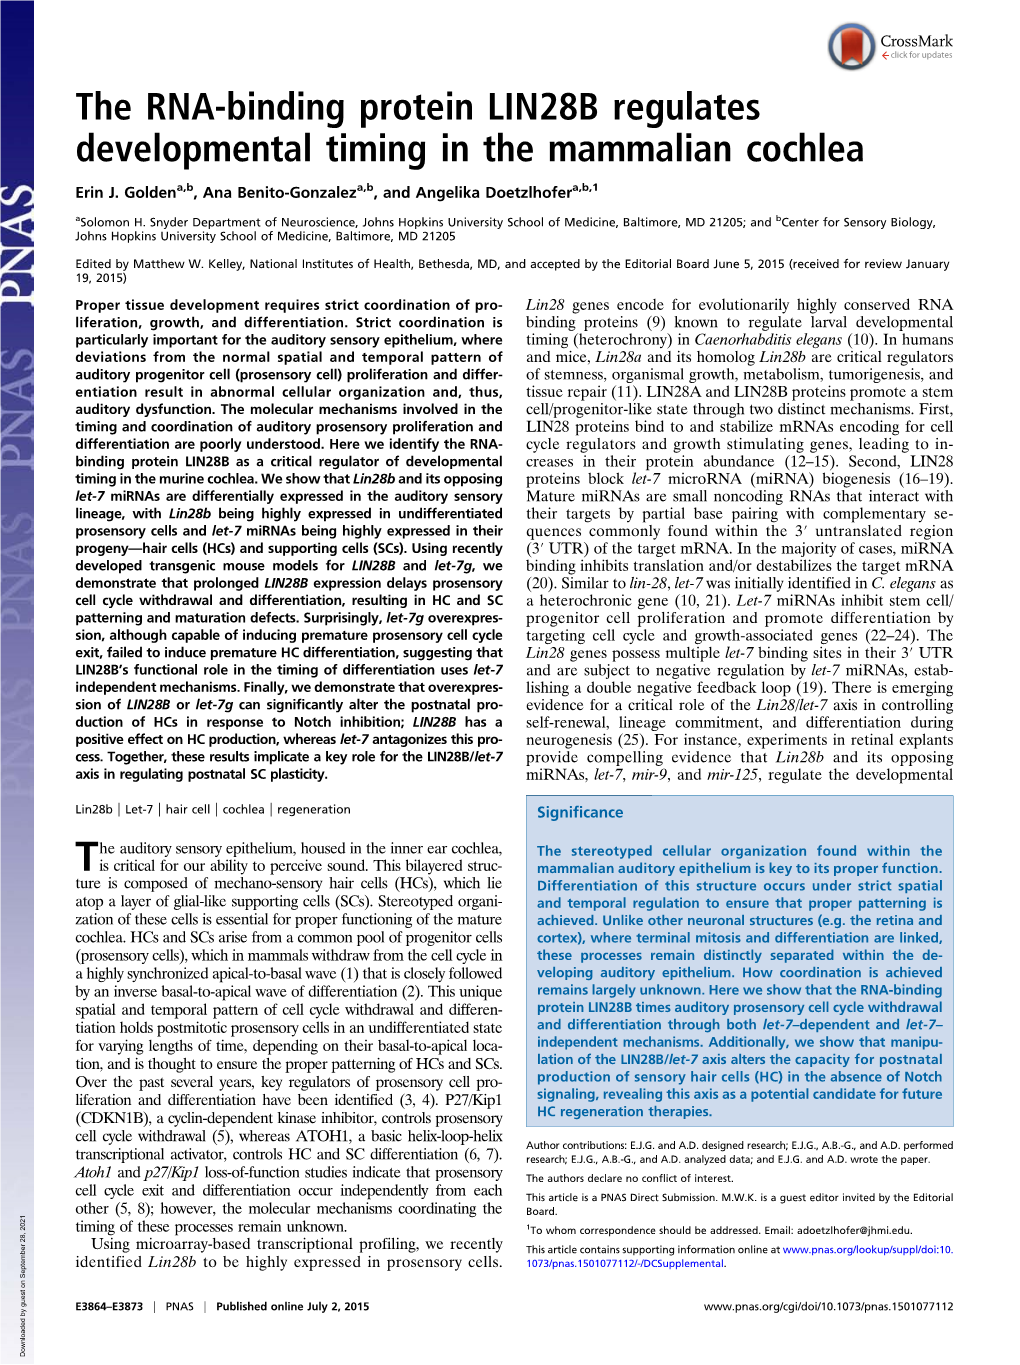 The RNA-Binding Protein LIN28B Regulates Developmental Timing in the Mammalian Cochlea